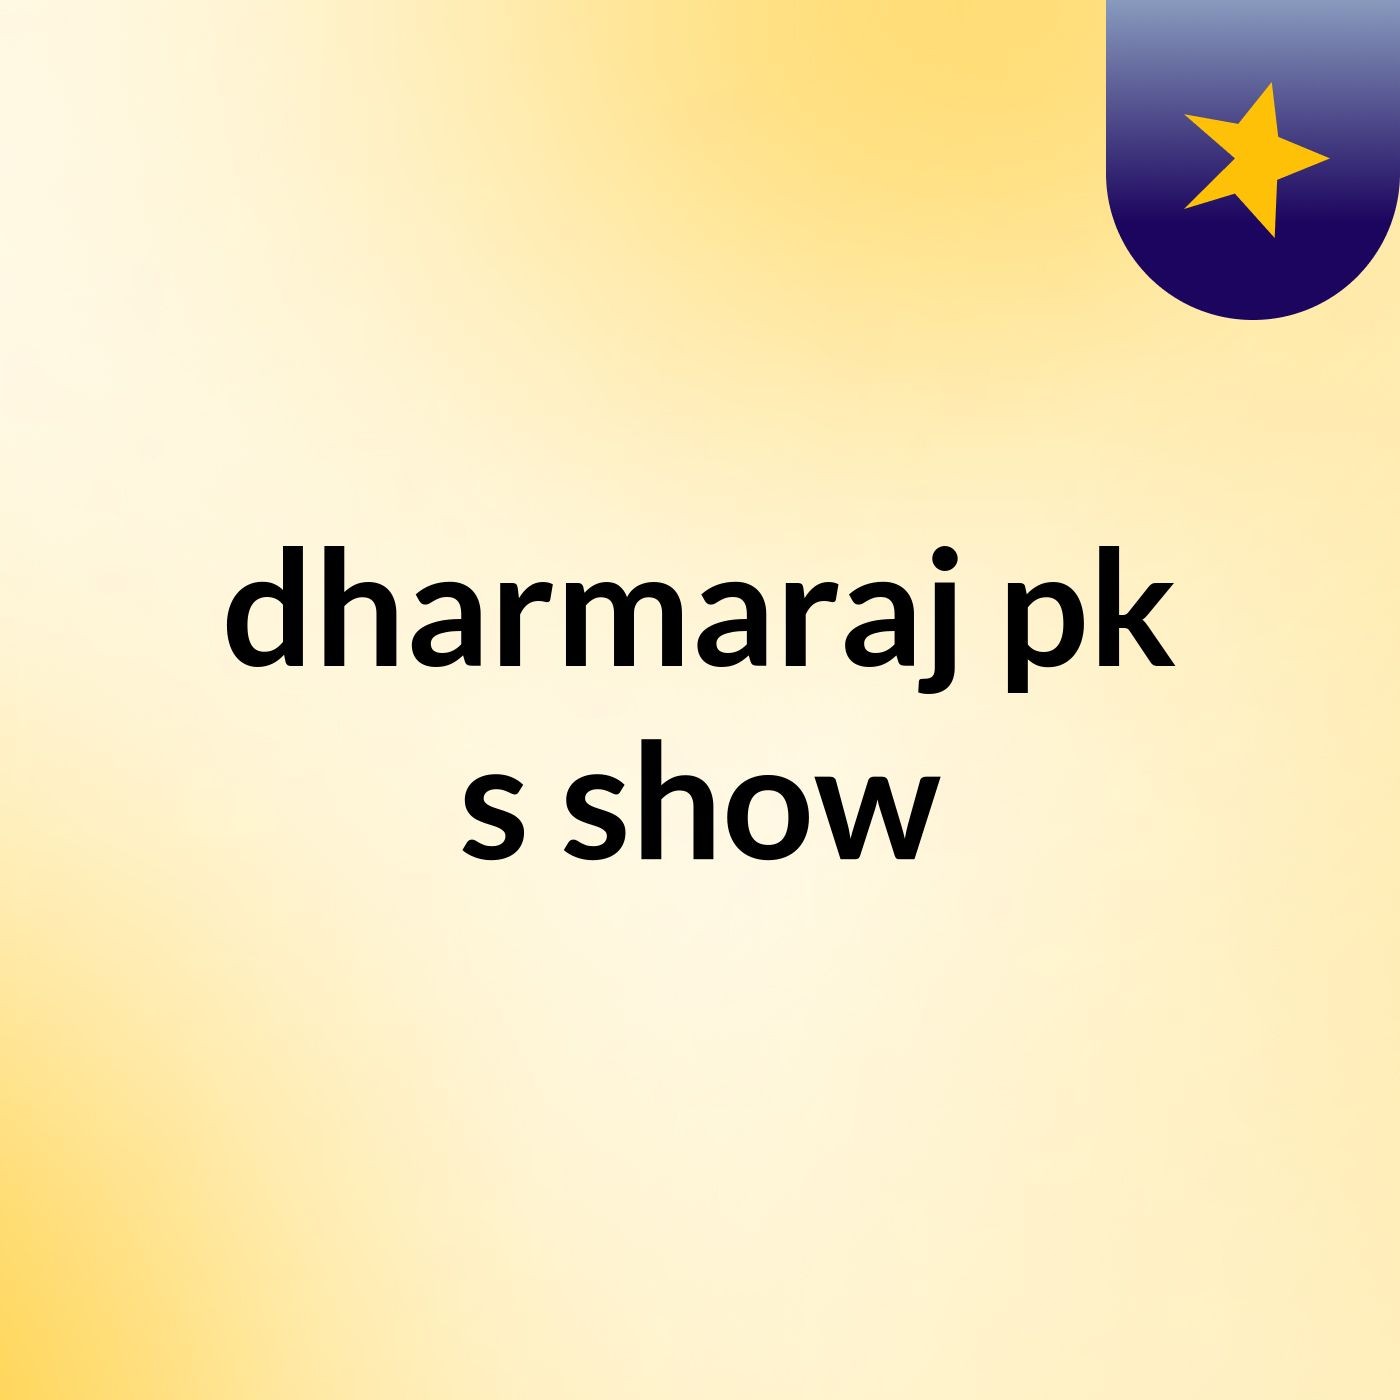 Episode 2 - dharmaraj pk's show